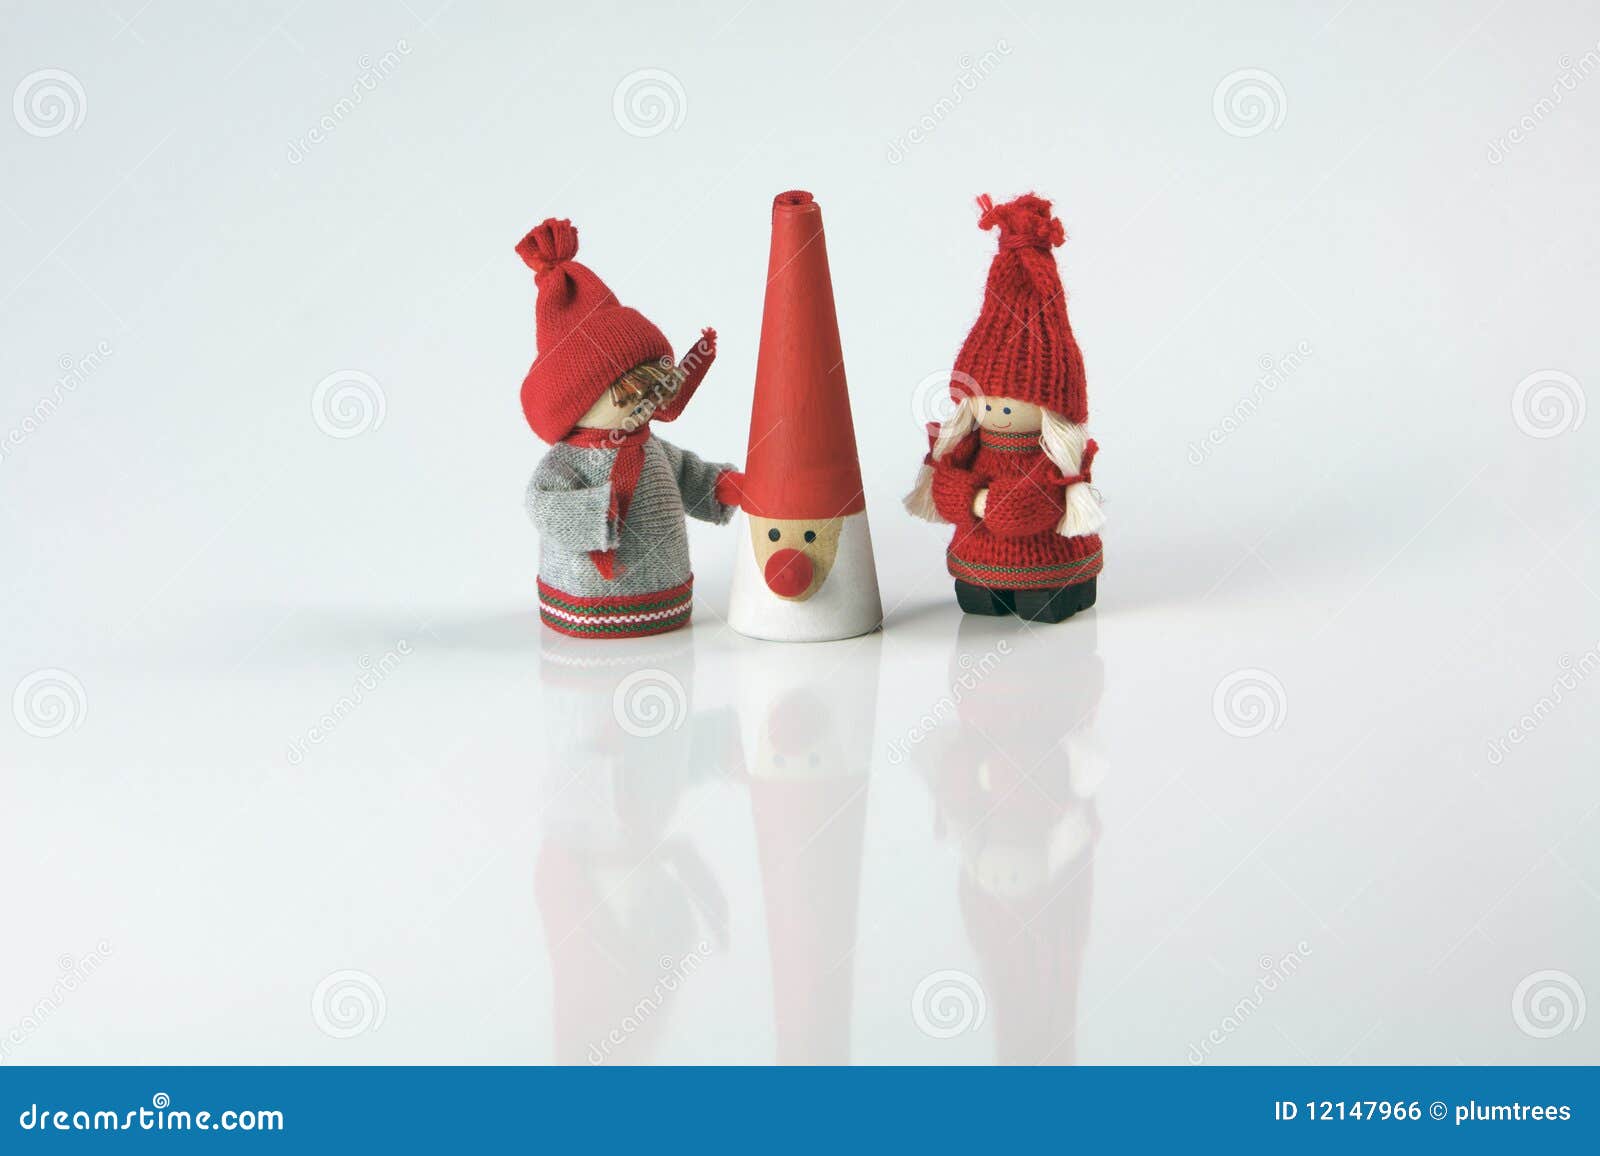 Festive Season Christmas Figures Stock Photo - Image: 12147966